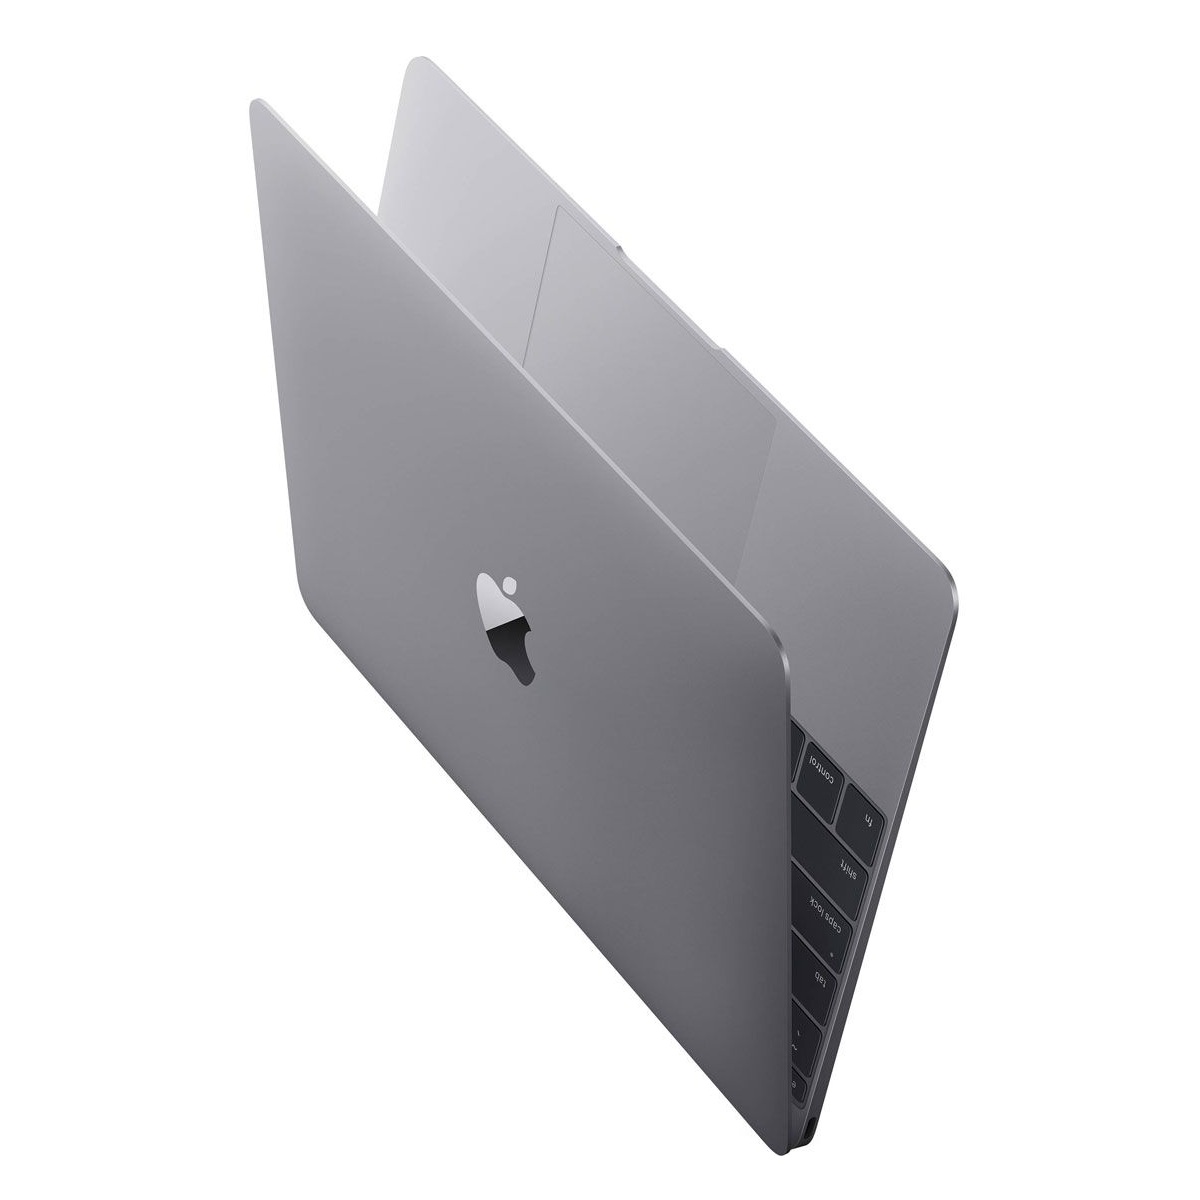 Ноутбук Apple MacBook 12 Retina Early 2015 Space Grey (MJY32RU/A) (Core M 1100 Mhz/12.0/2304x1440/8.0Gb/256Gb SSD/DVD нет/Intel HD Graphics 5300/Wi-Fi/Bluetooth/MacOS X)